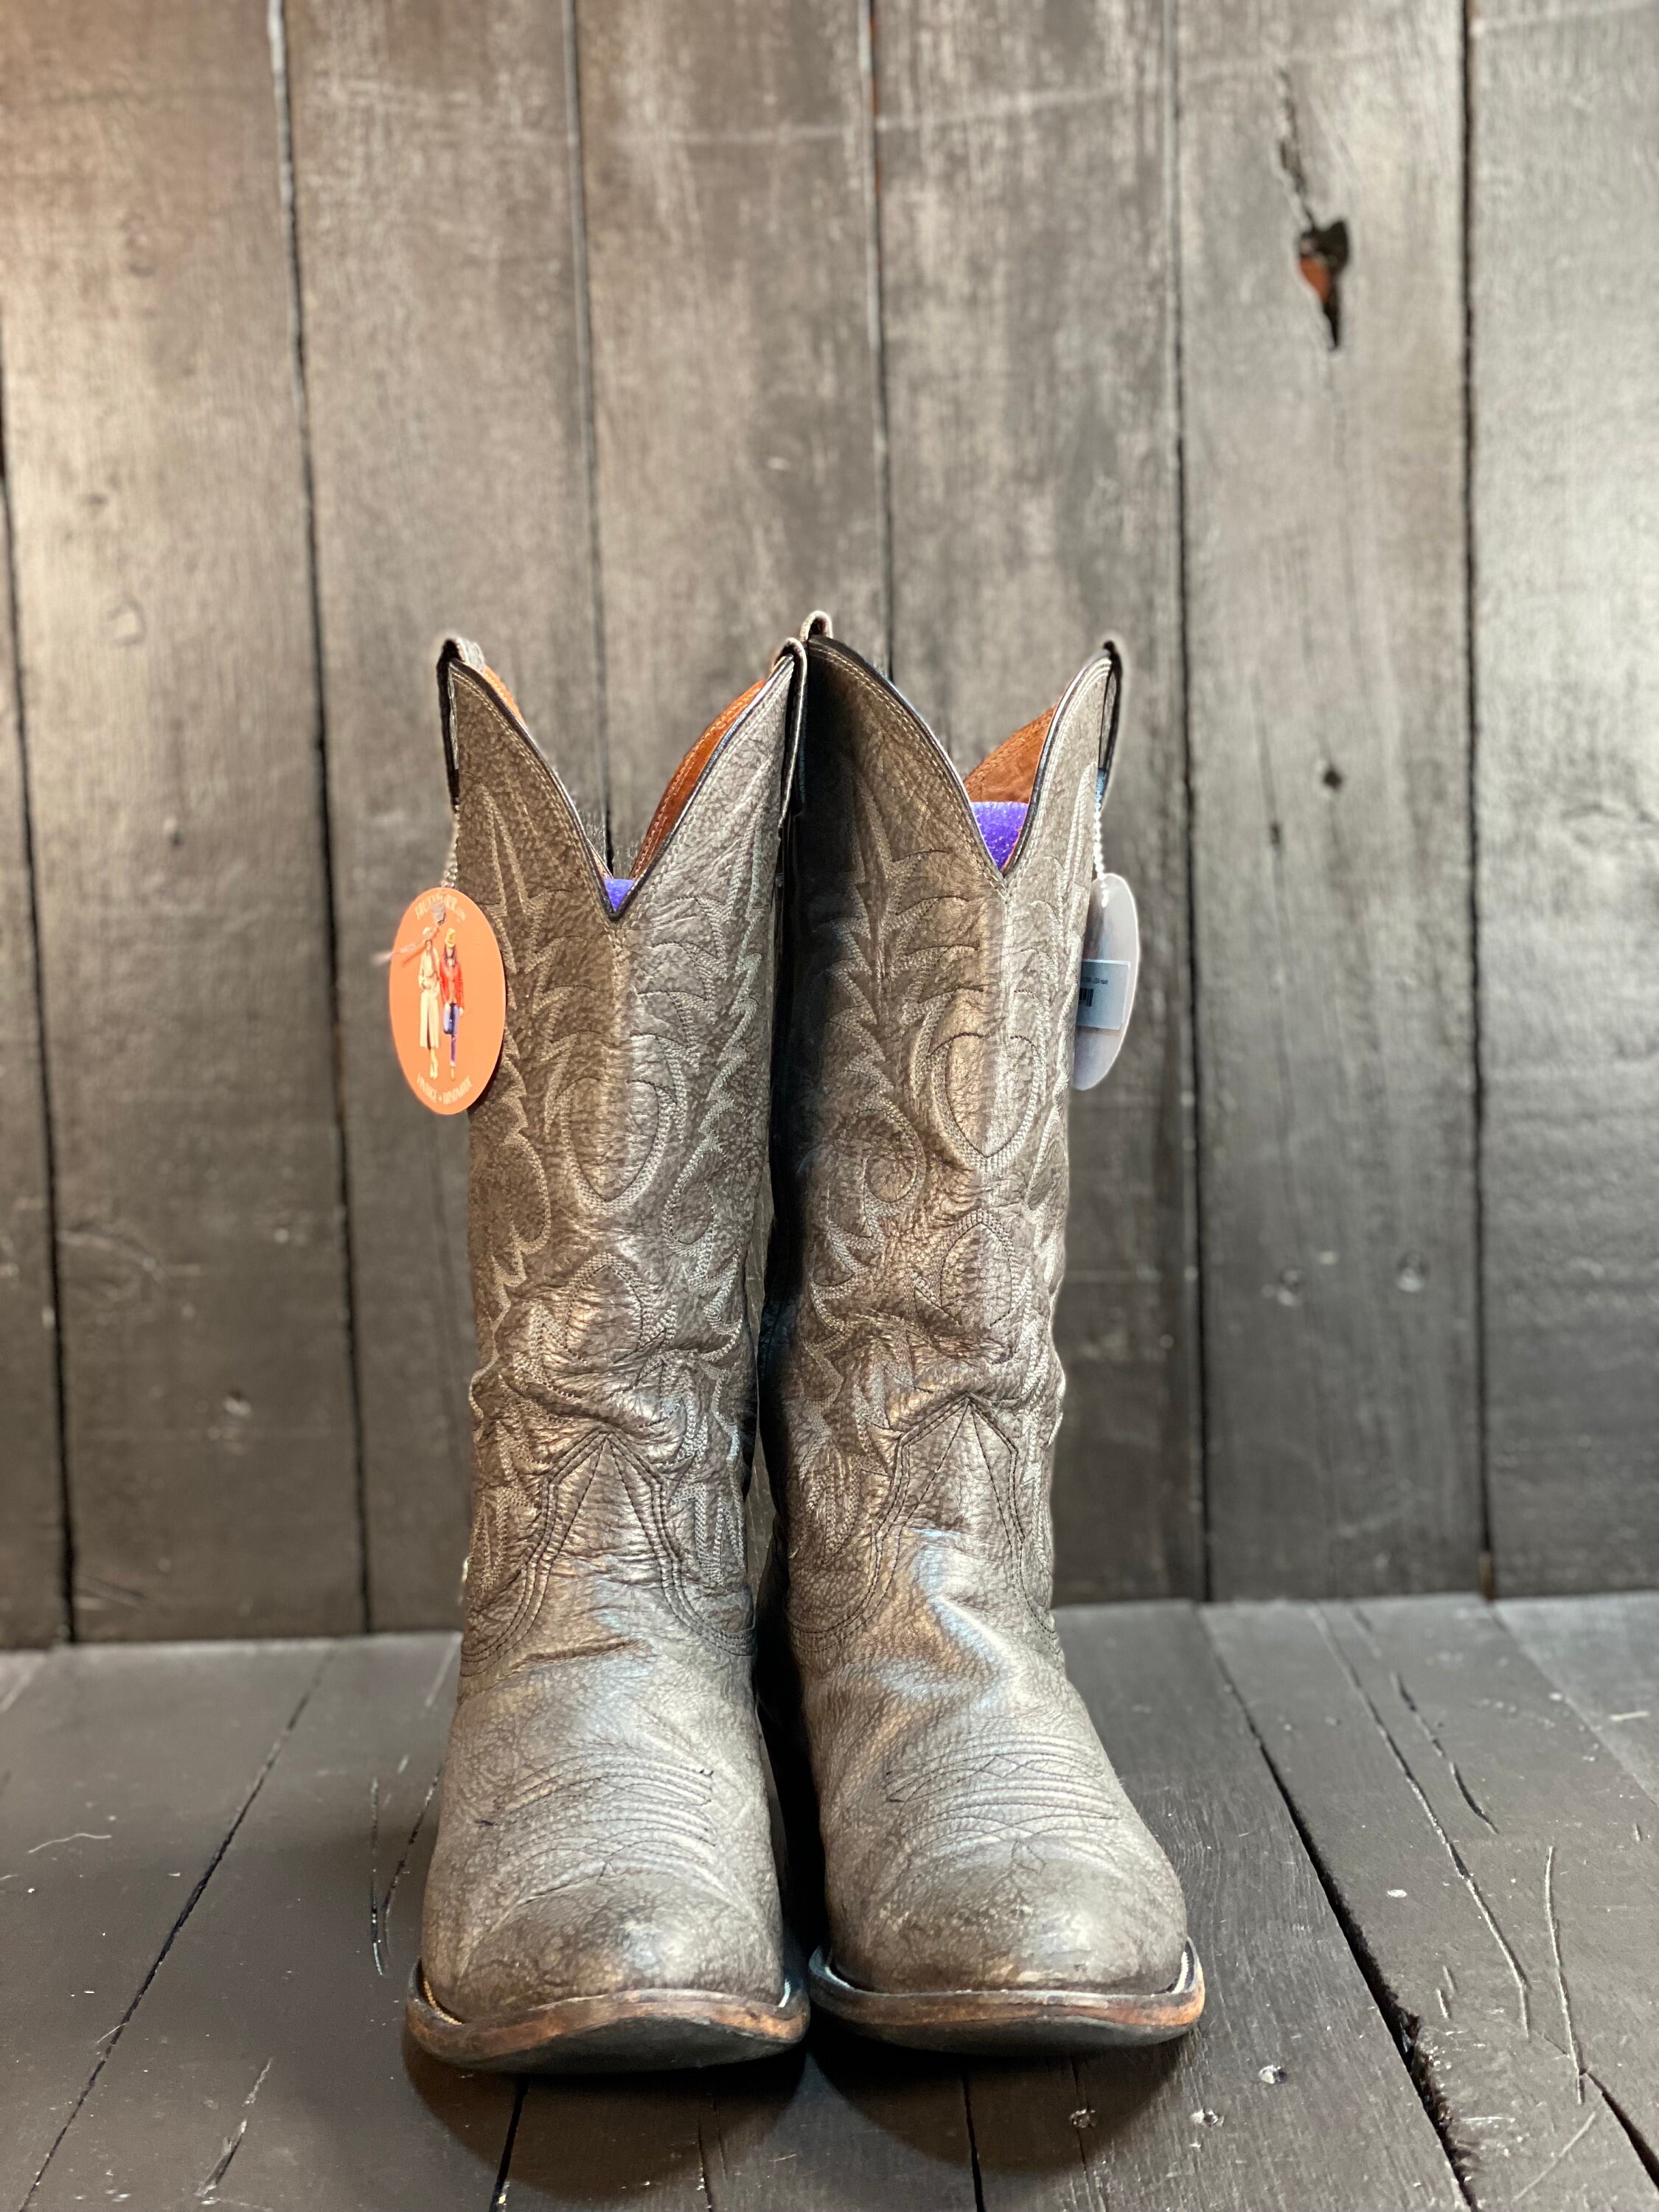 Mens 9E Vintage NOCONA USA Calf Leather Western BOOTS Minimalist Classic Cowboy Black J Toes-Pegged Soles